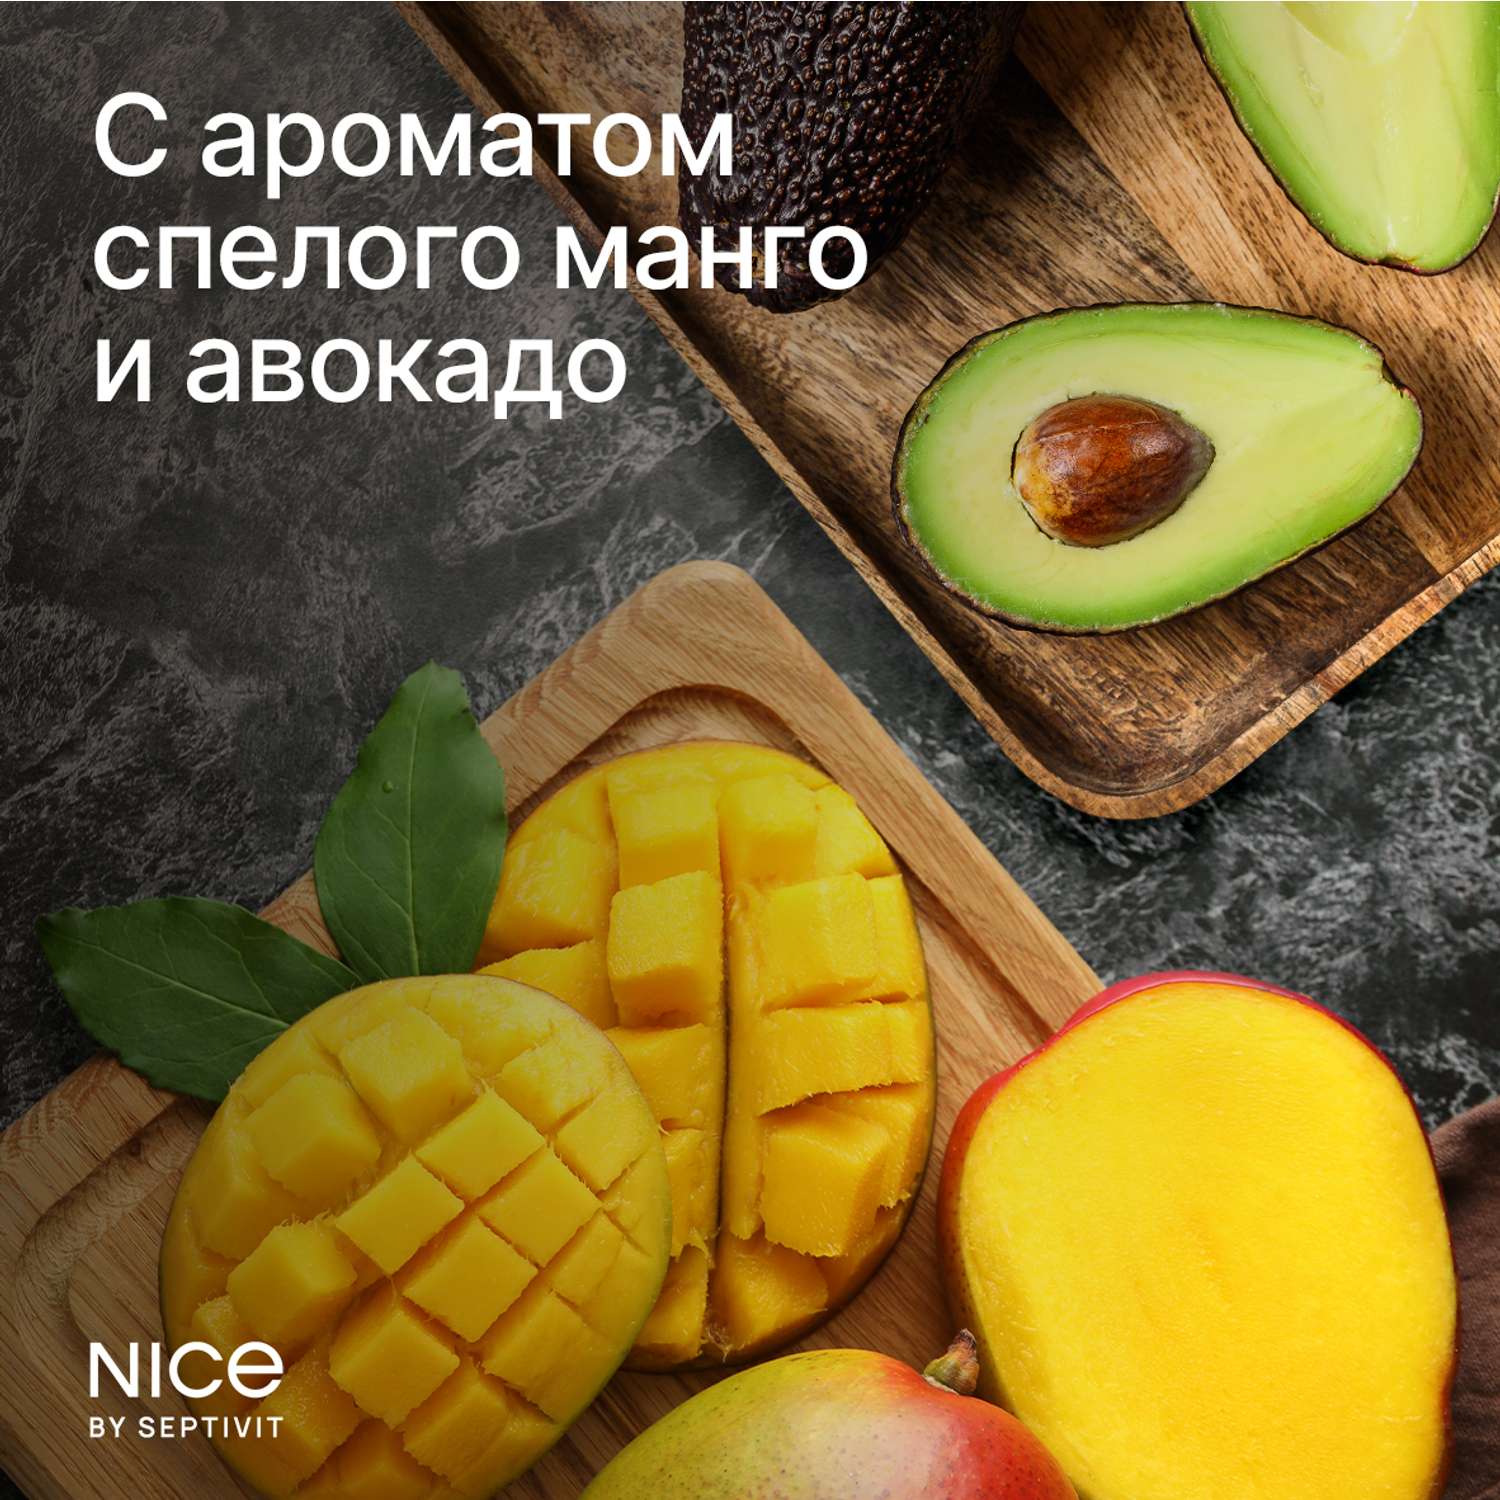 Жидкое мыло NICE by Septivit с ароматом Авокадо-манго 1л - фото 3